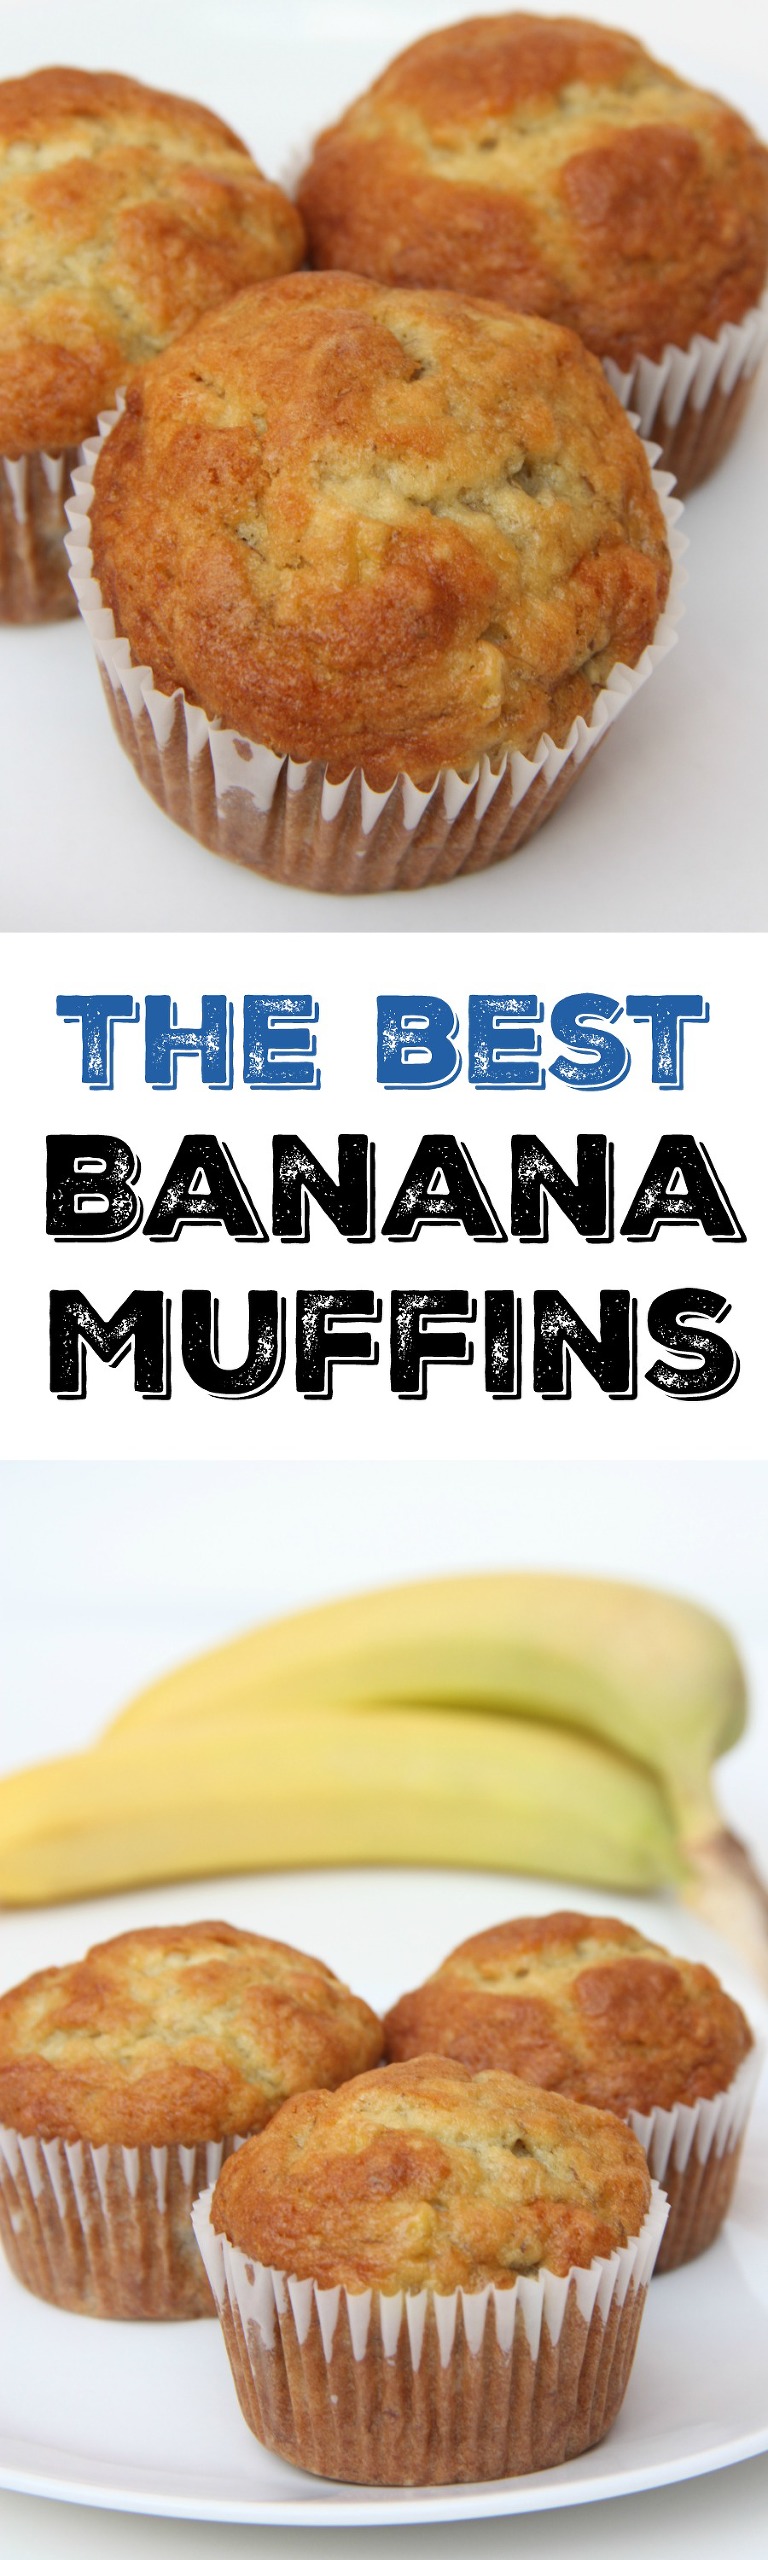 The best banana muffins